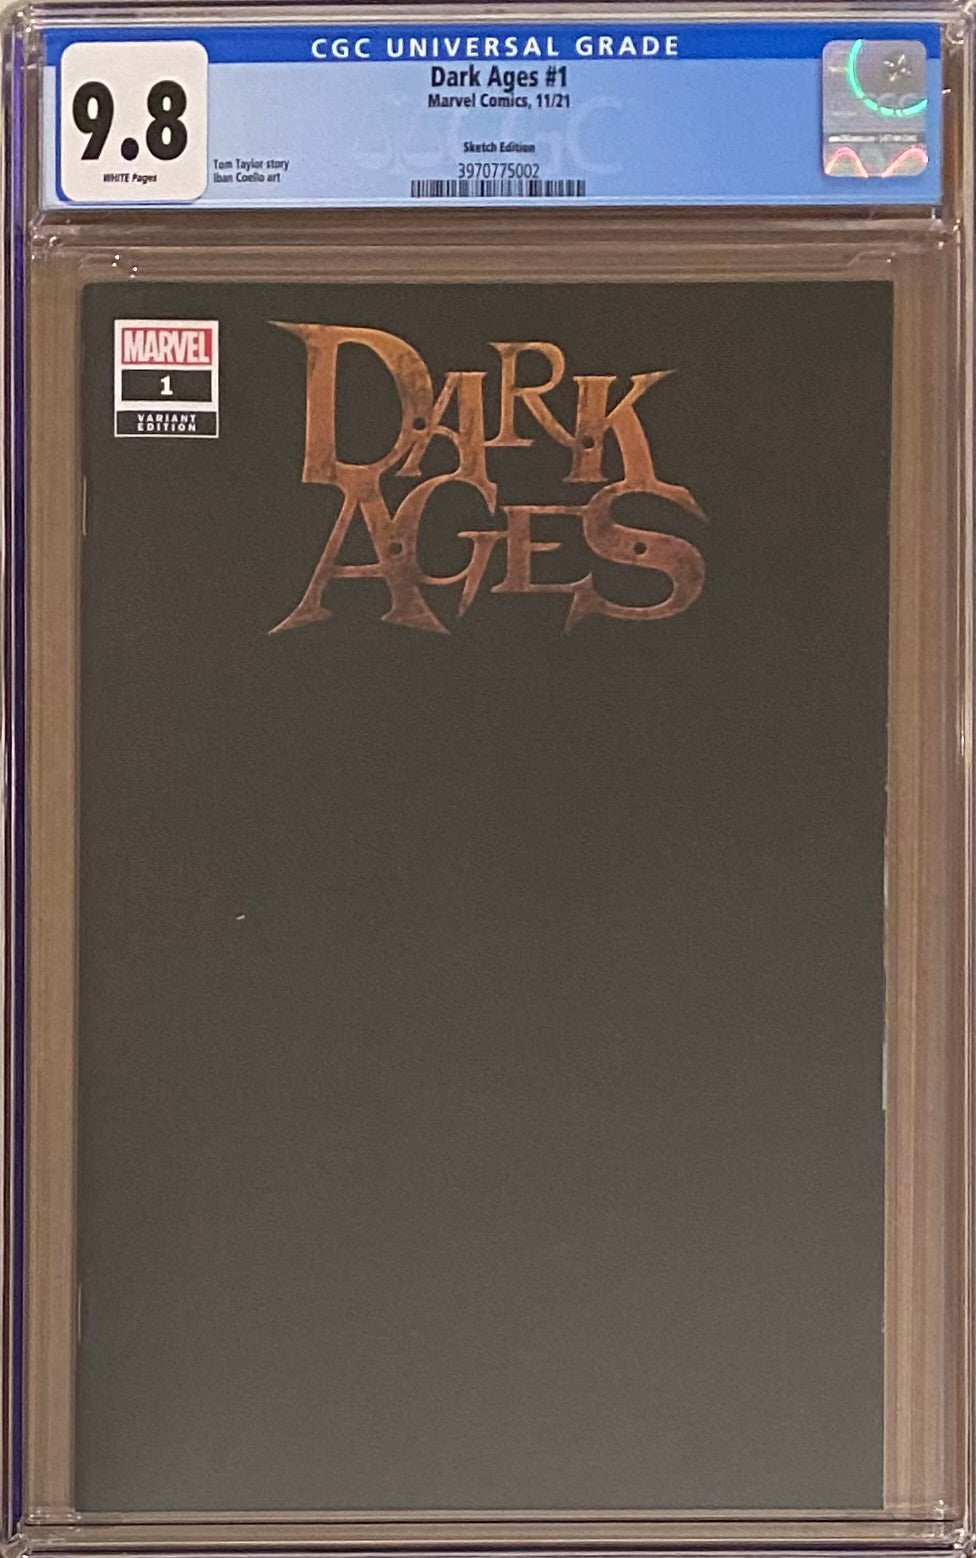 Dark Ages #1 Sketch Edition Variant CGC 9.8